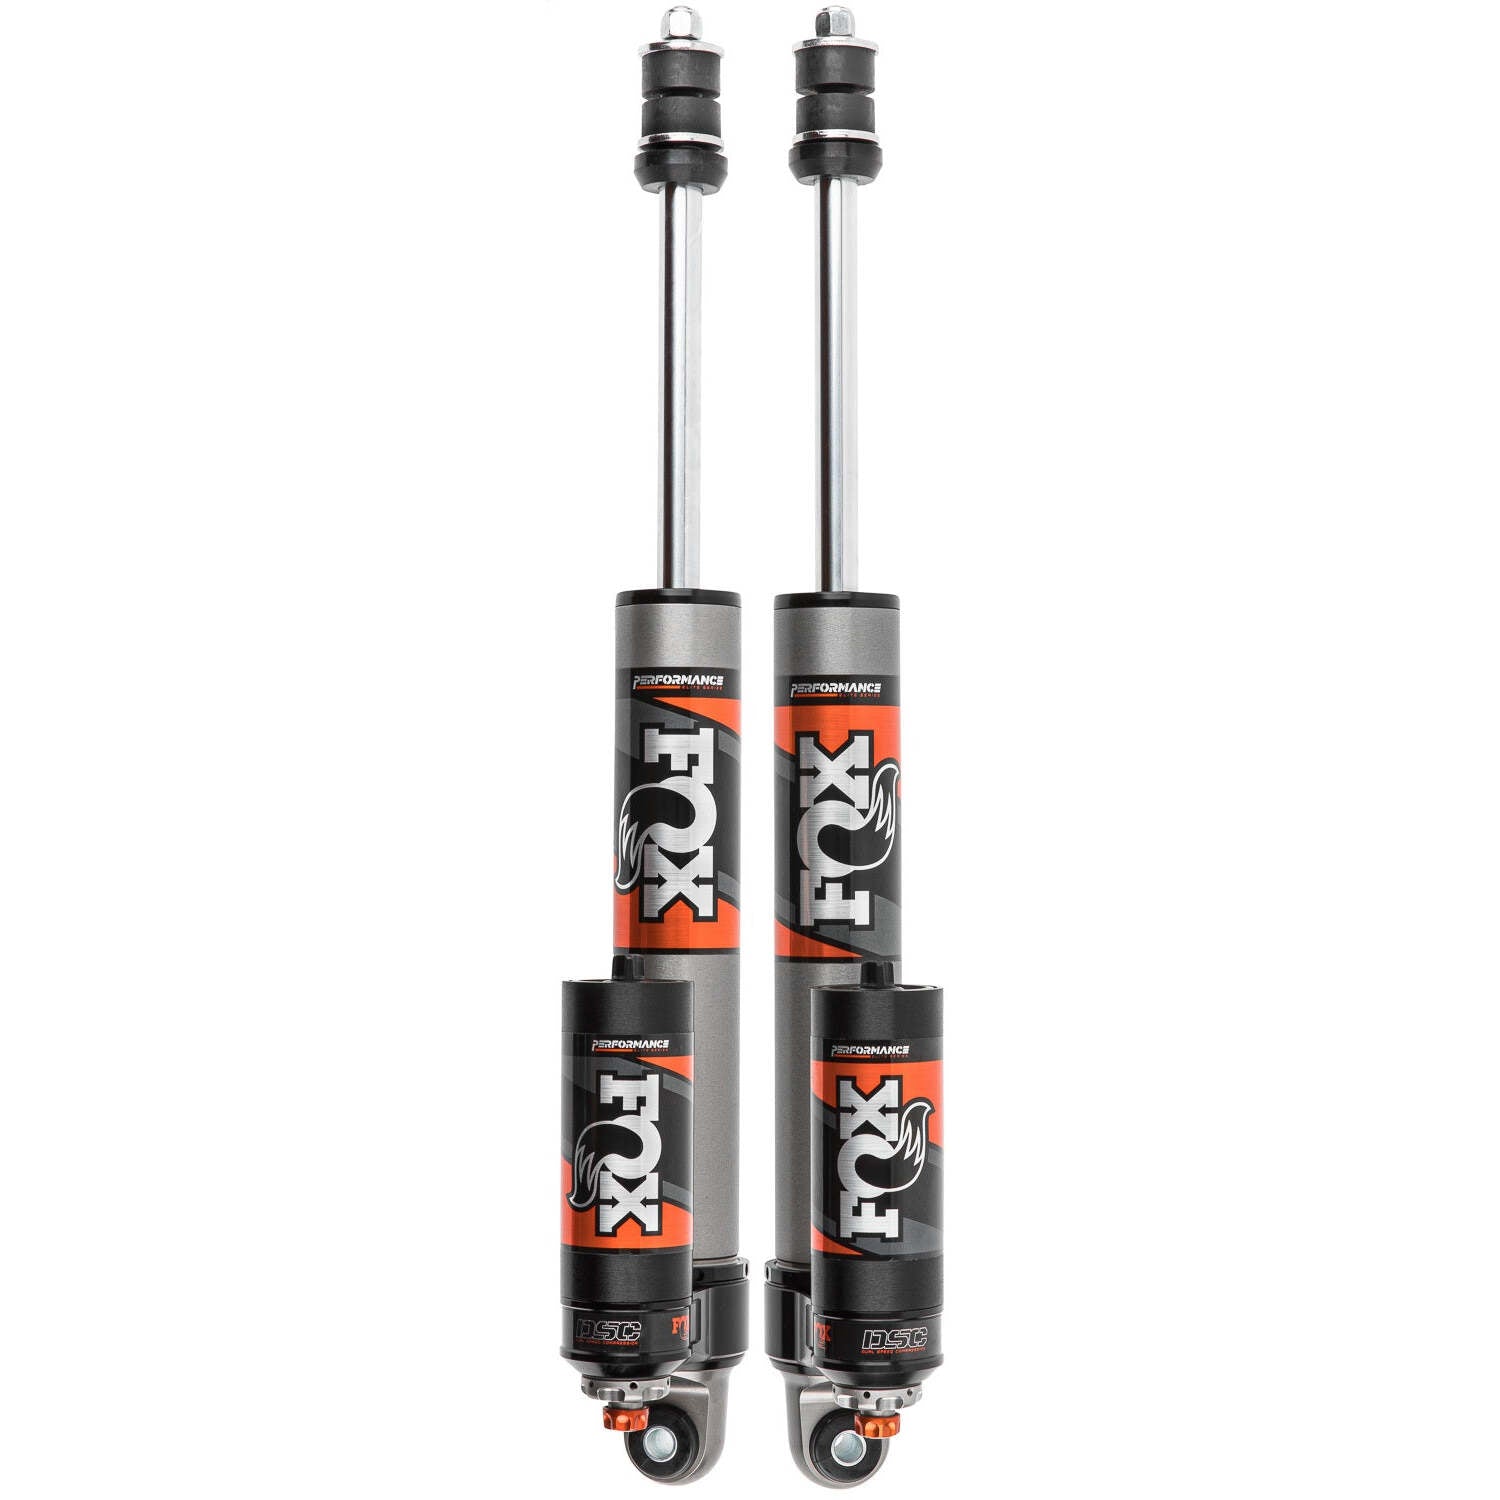 FOX 883-26-067 Rear Performance Elite Series 2.5 Reservoir Shock (Pair) - Adjustable Ram 2500 4-6" Lift